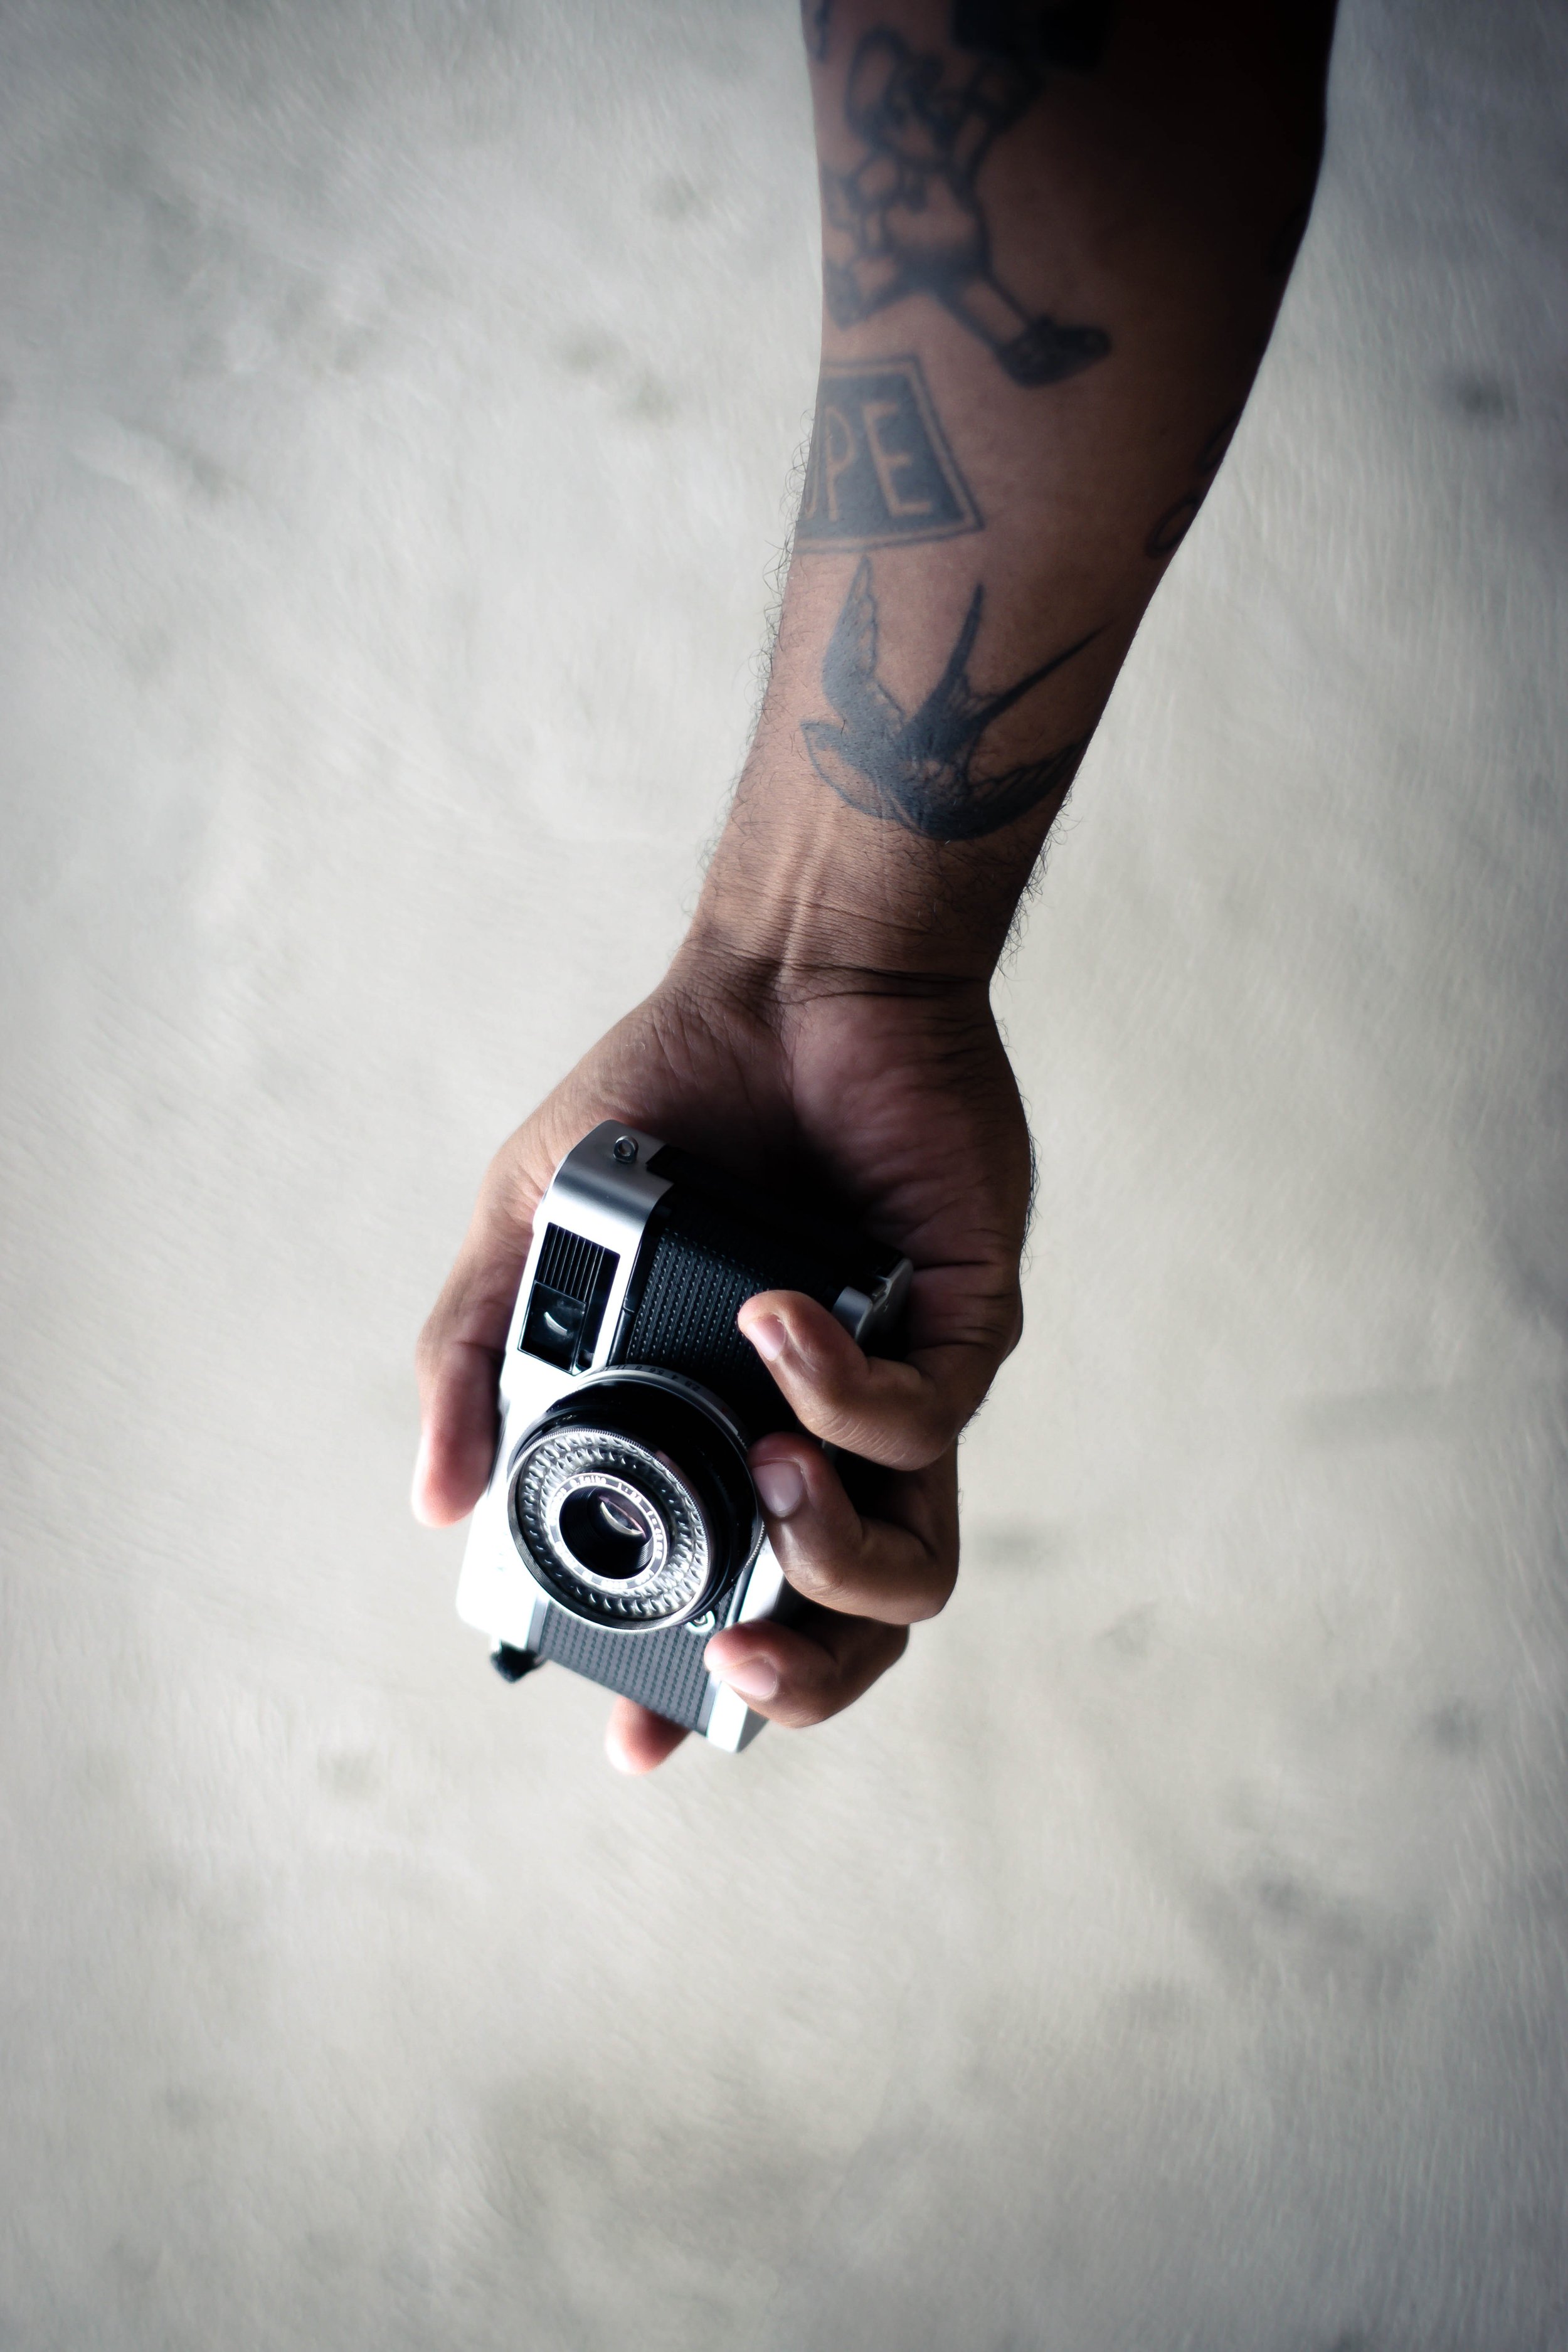 Camera Tattoo with Seattle View by xlyricdx3 on DeviantArt